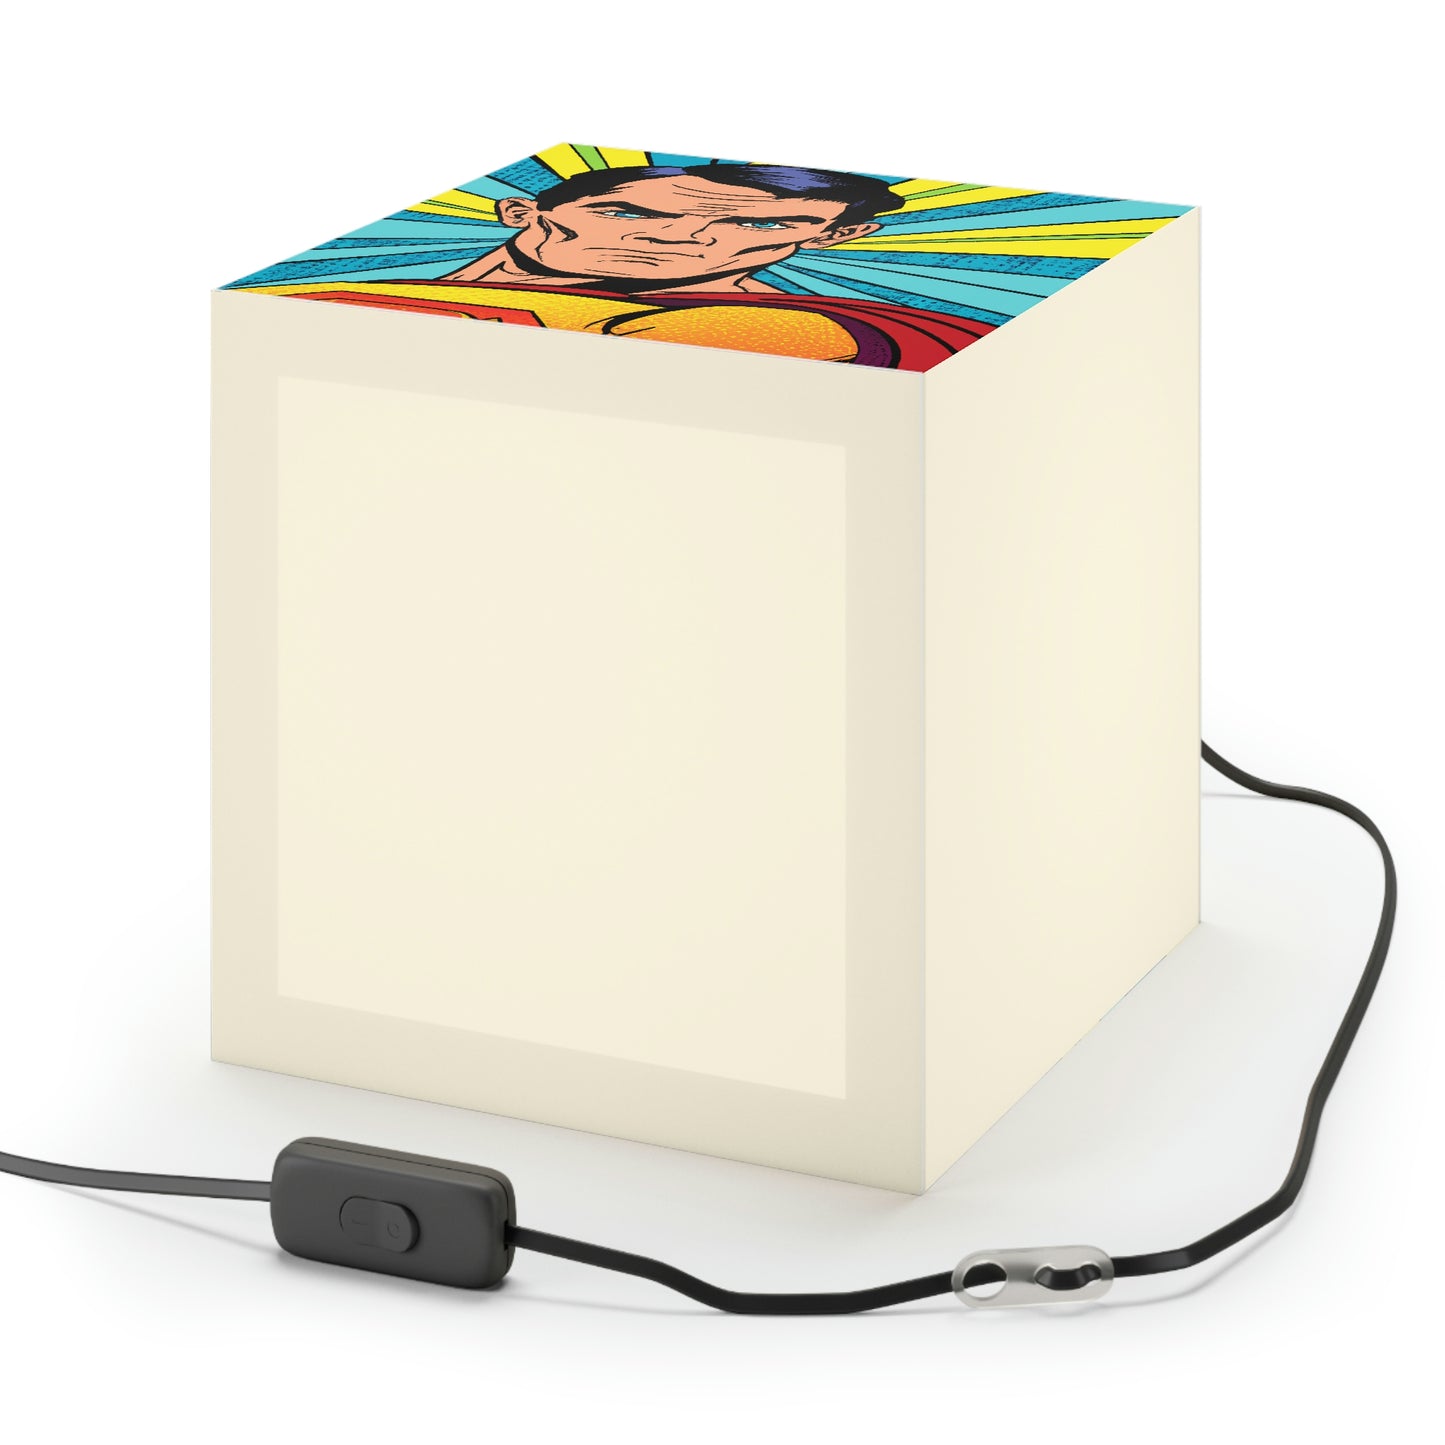 "The Hero's Heroism: A Comic-Book Portrait" - The Alien Light Cube Lamp